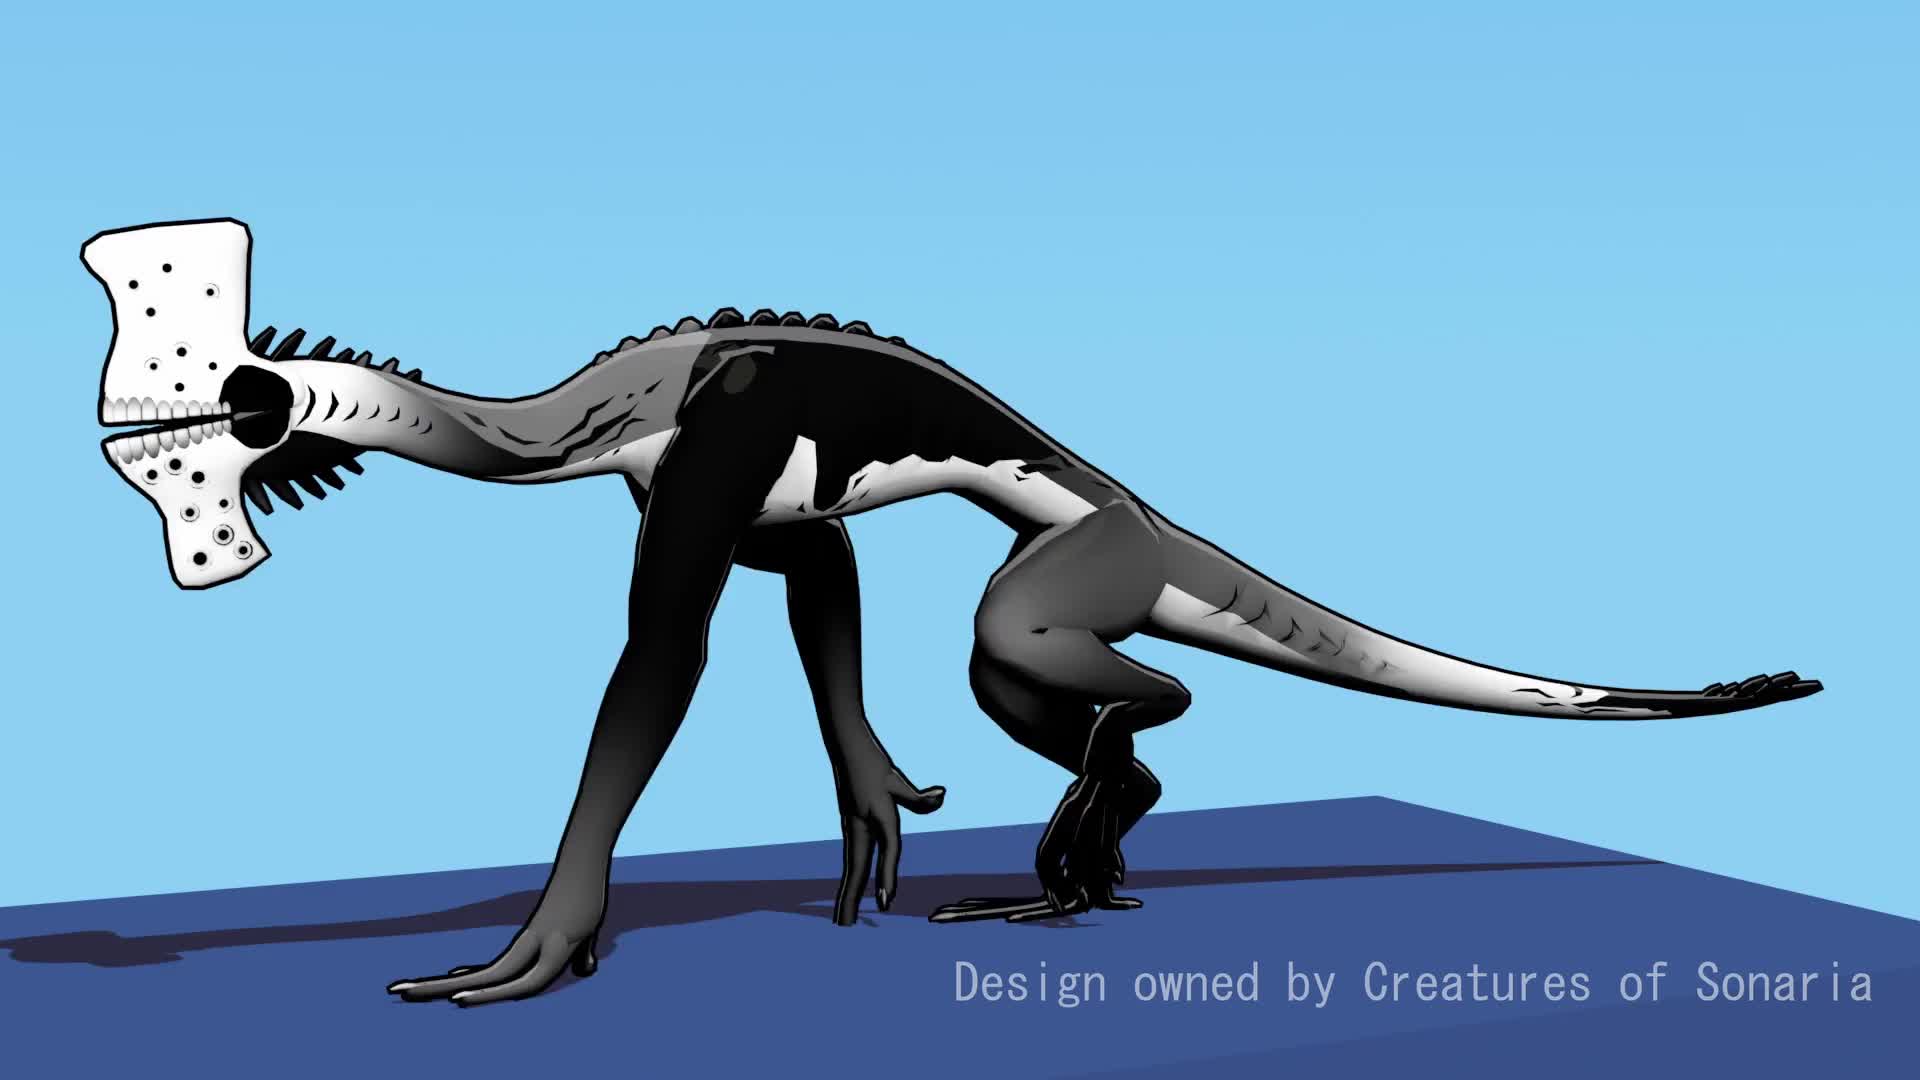 ArtStation - Creatures of Sonaria - Creature animations 2